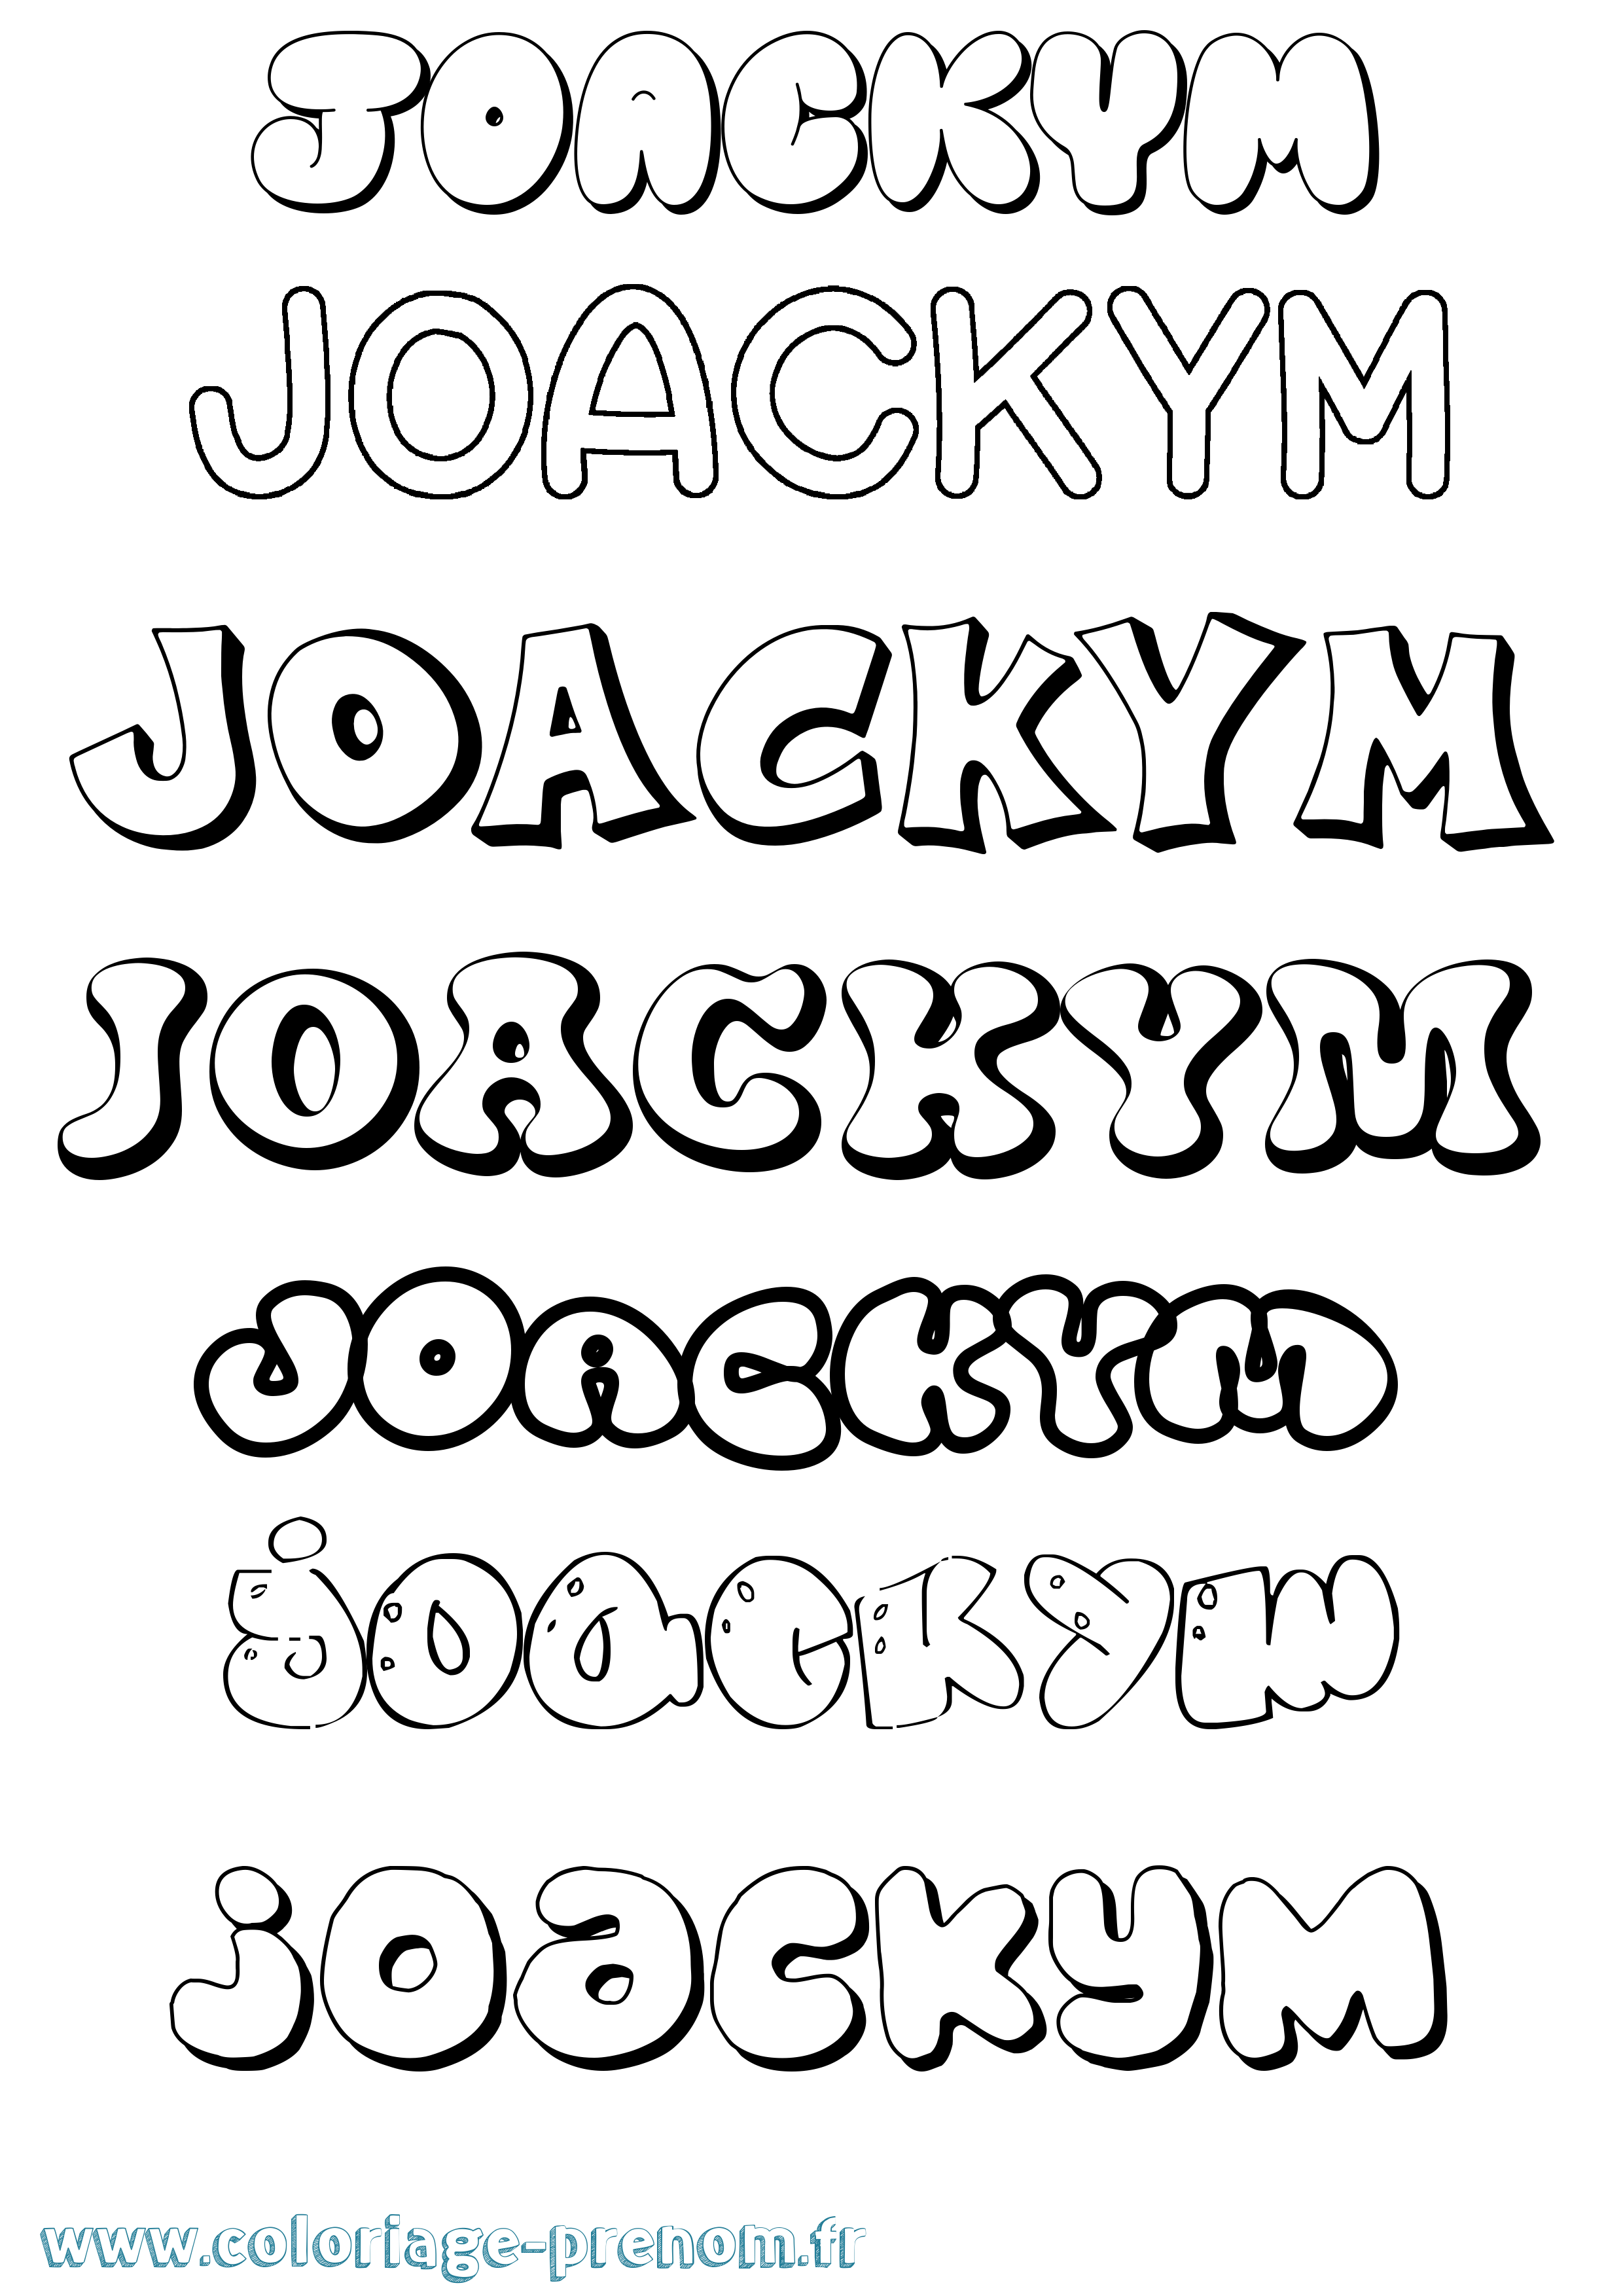 Coloriage prénom Joackym Bubble